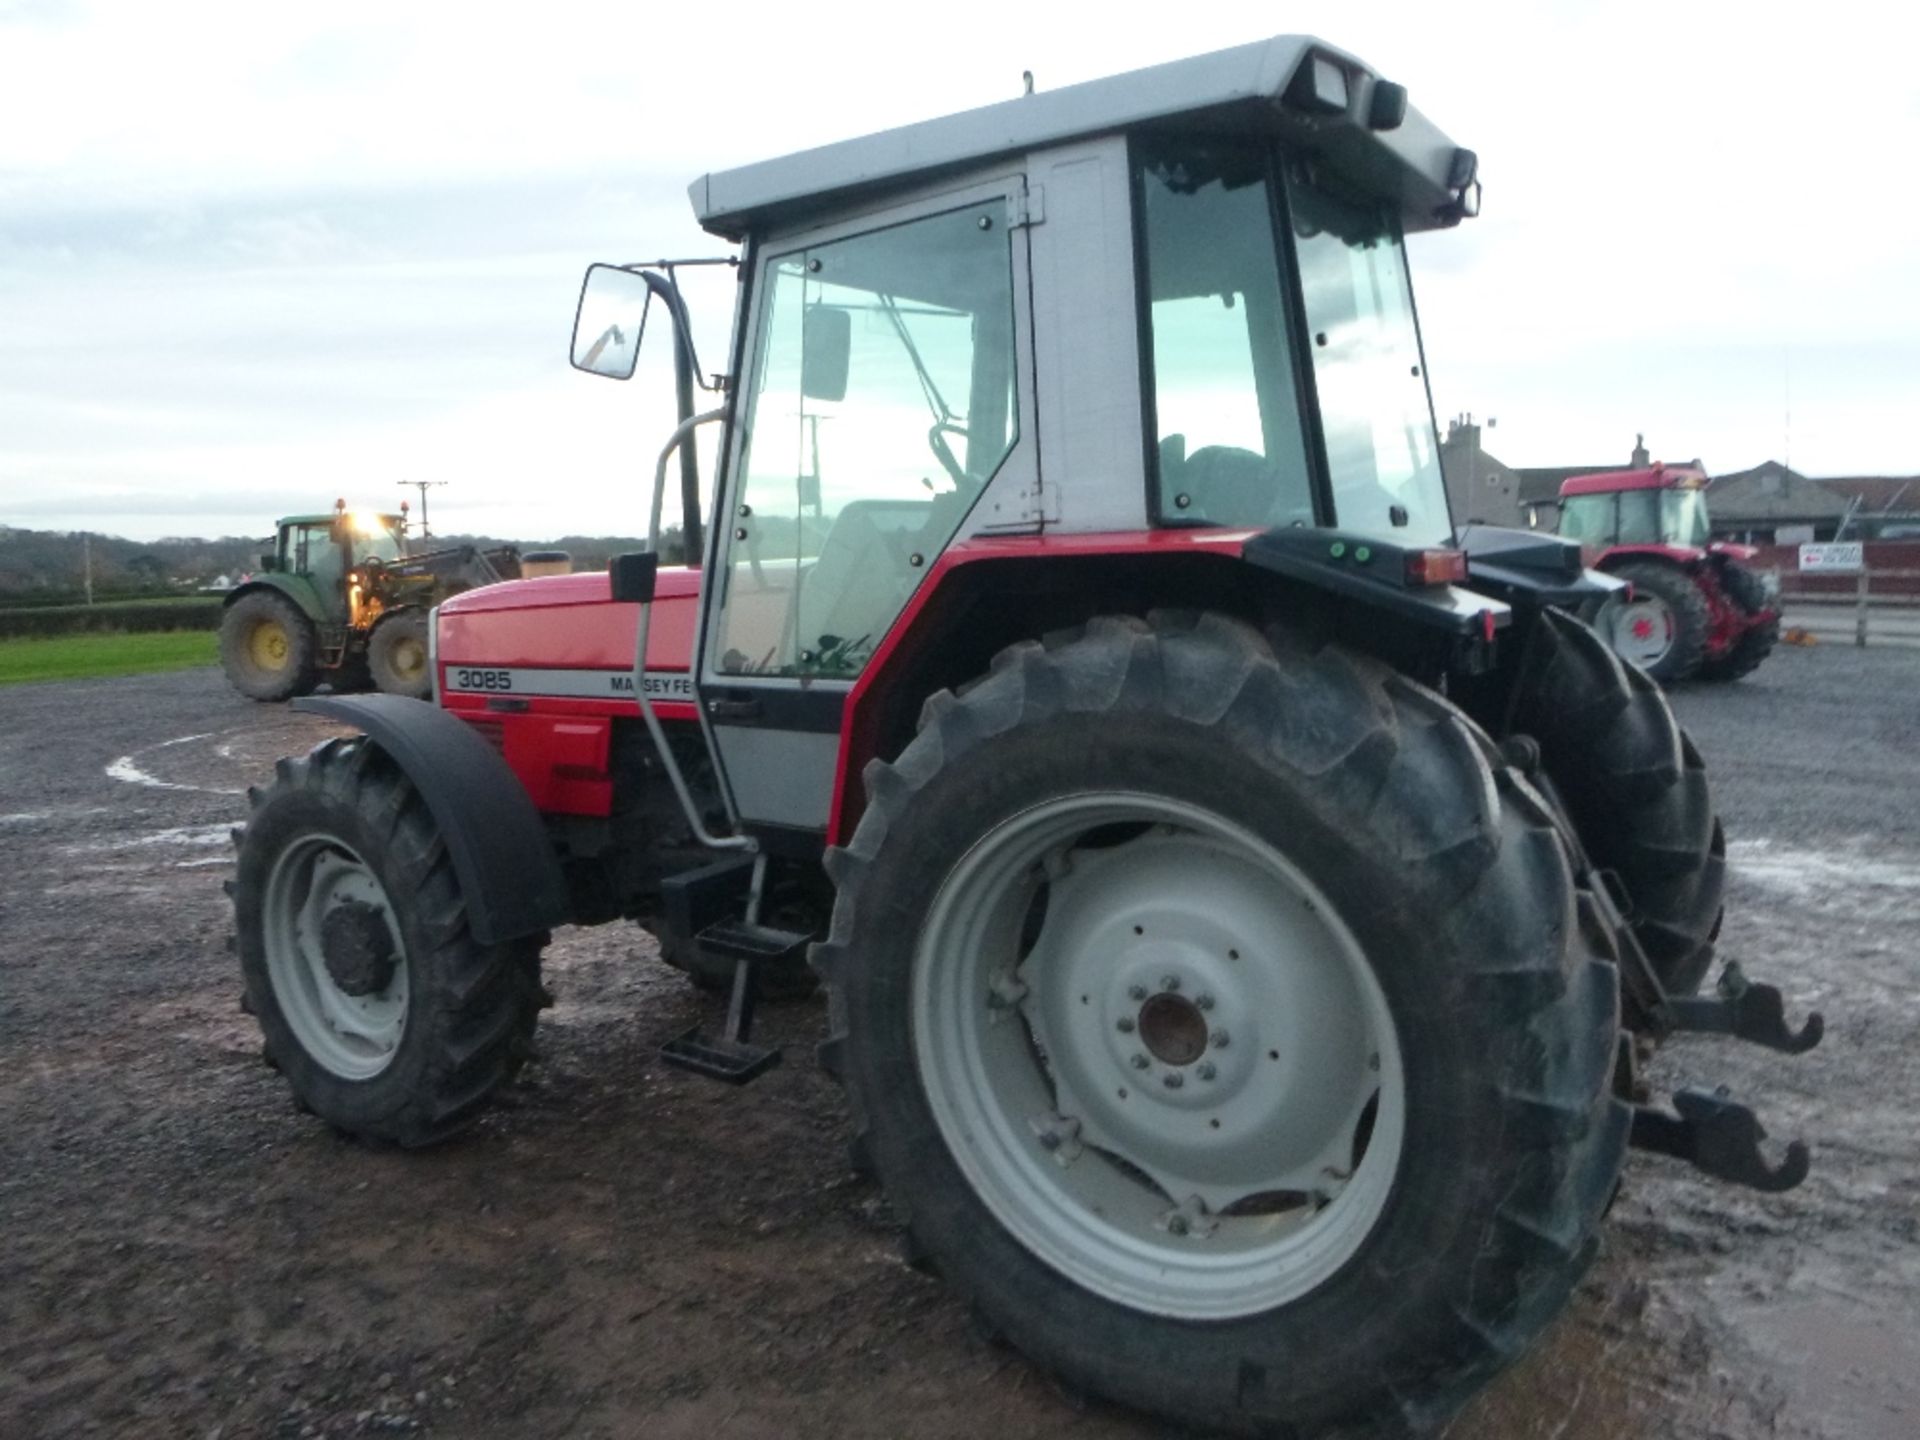 Massey Ferguson 3085 4x4 Dynashift Tractor. 2700 hrs
Date of Reg 16/03/95 - Image 6 of 8